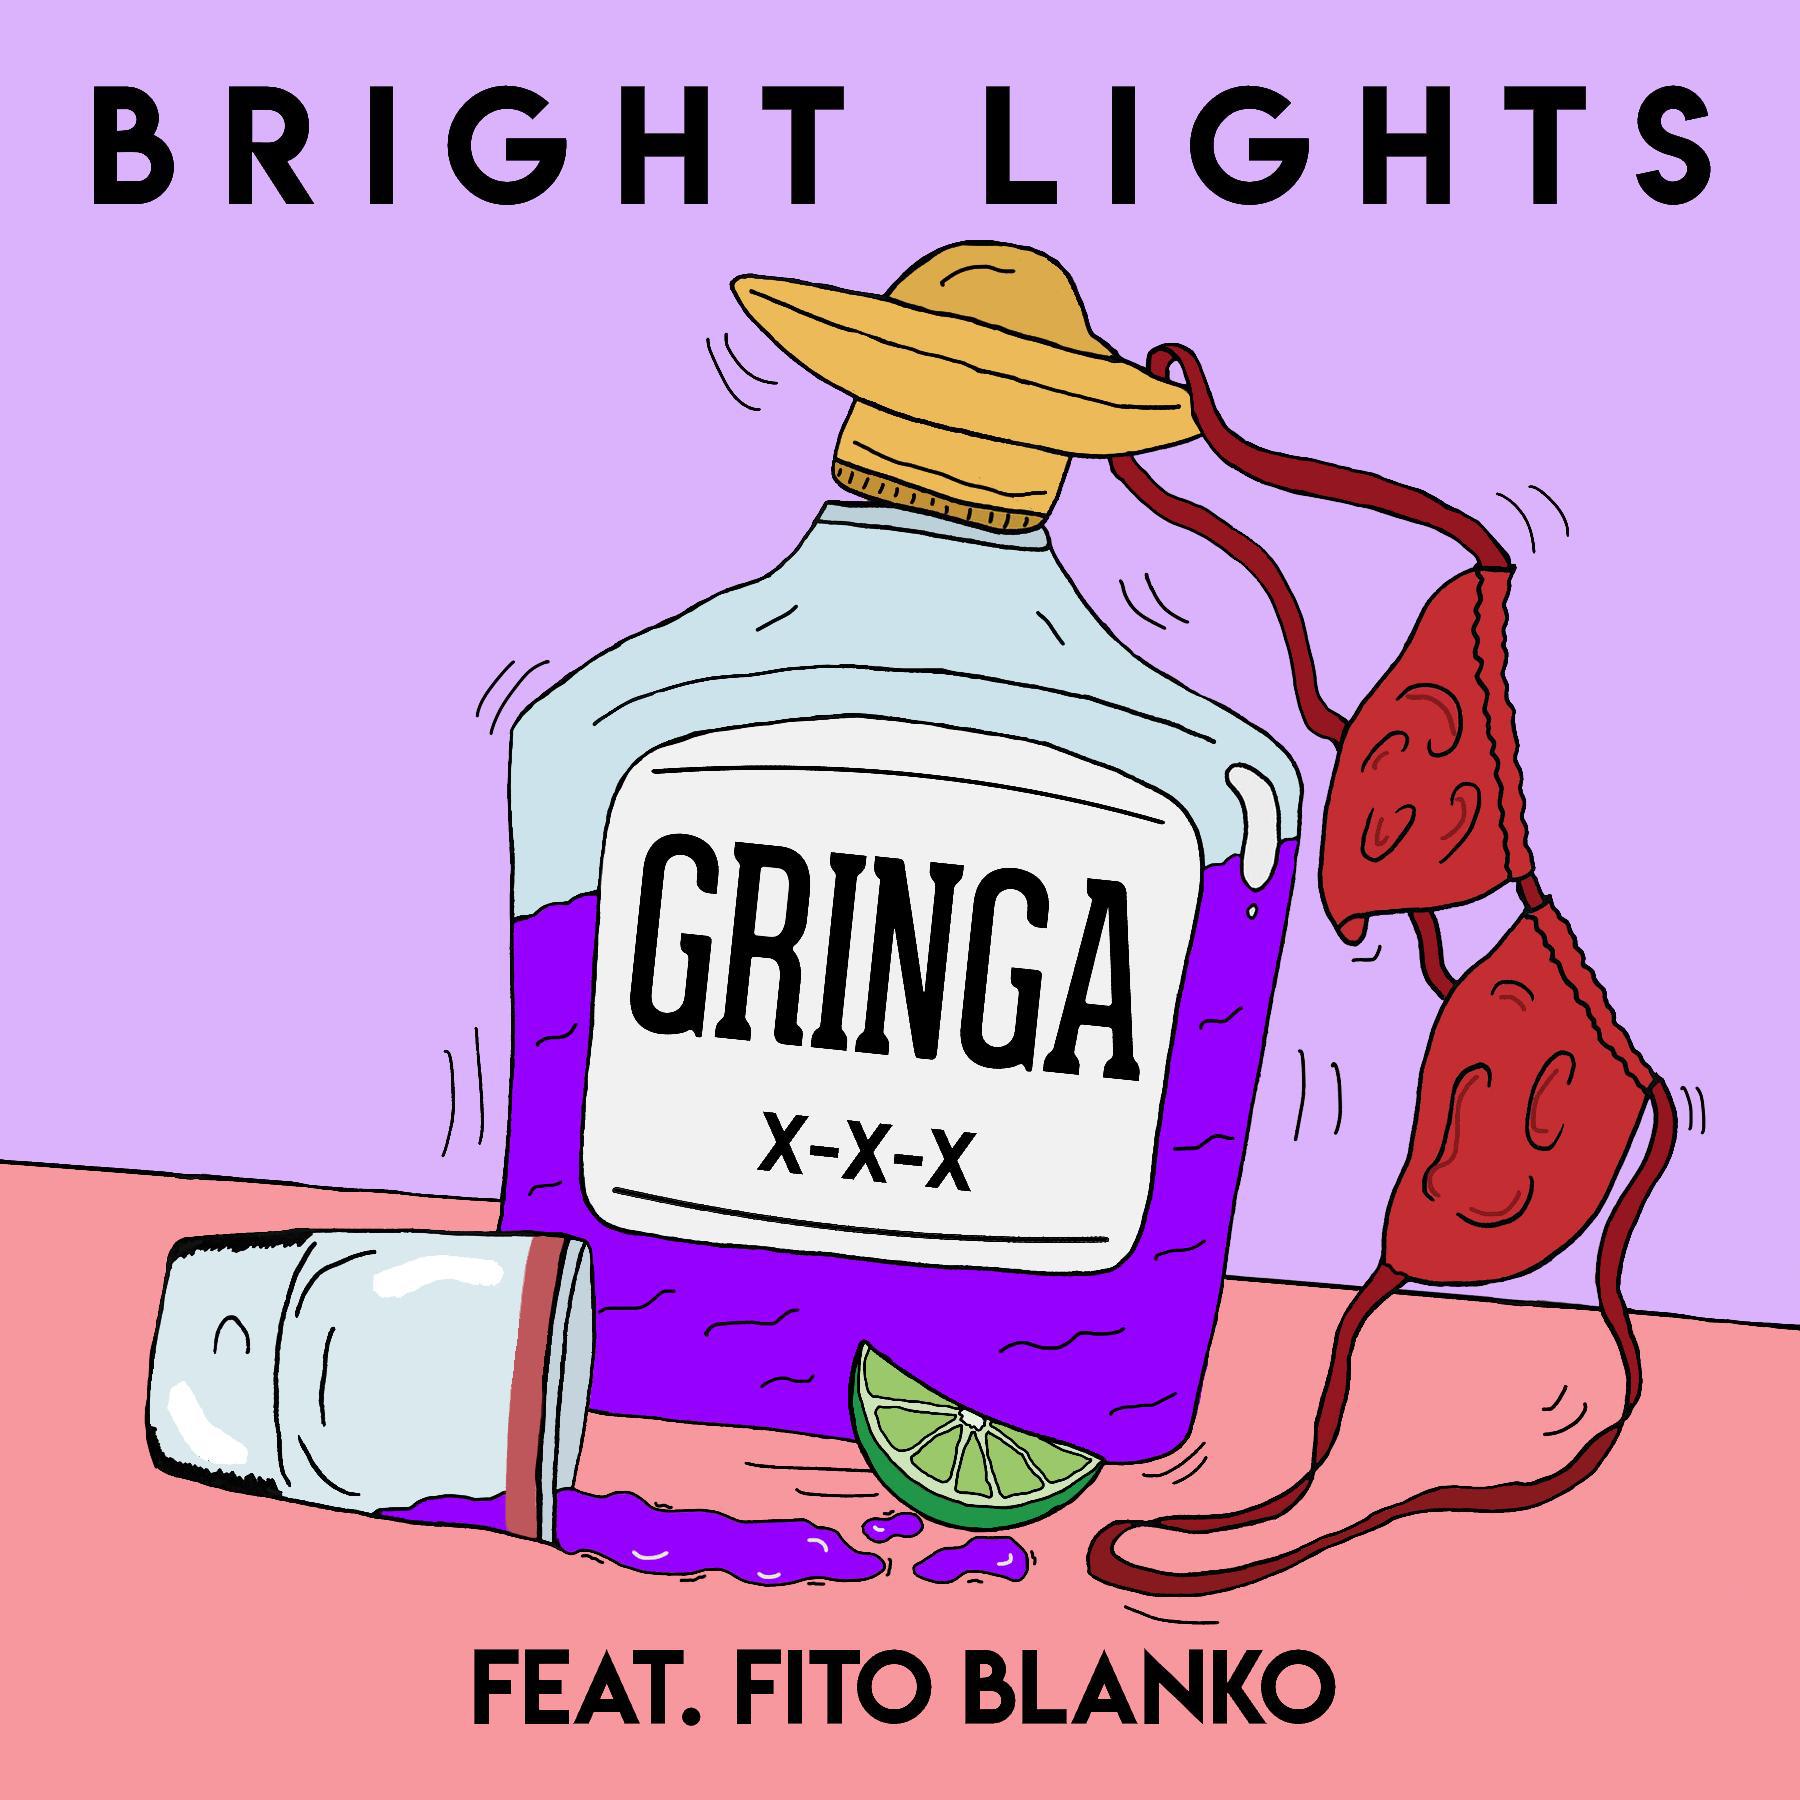 Bright Lights - Gringa